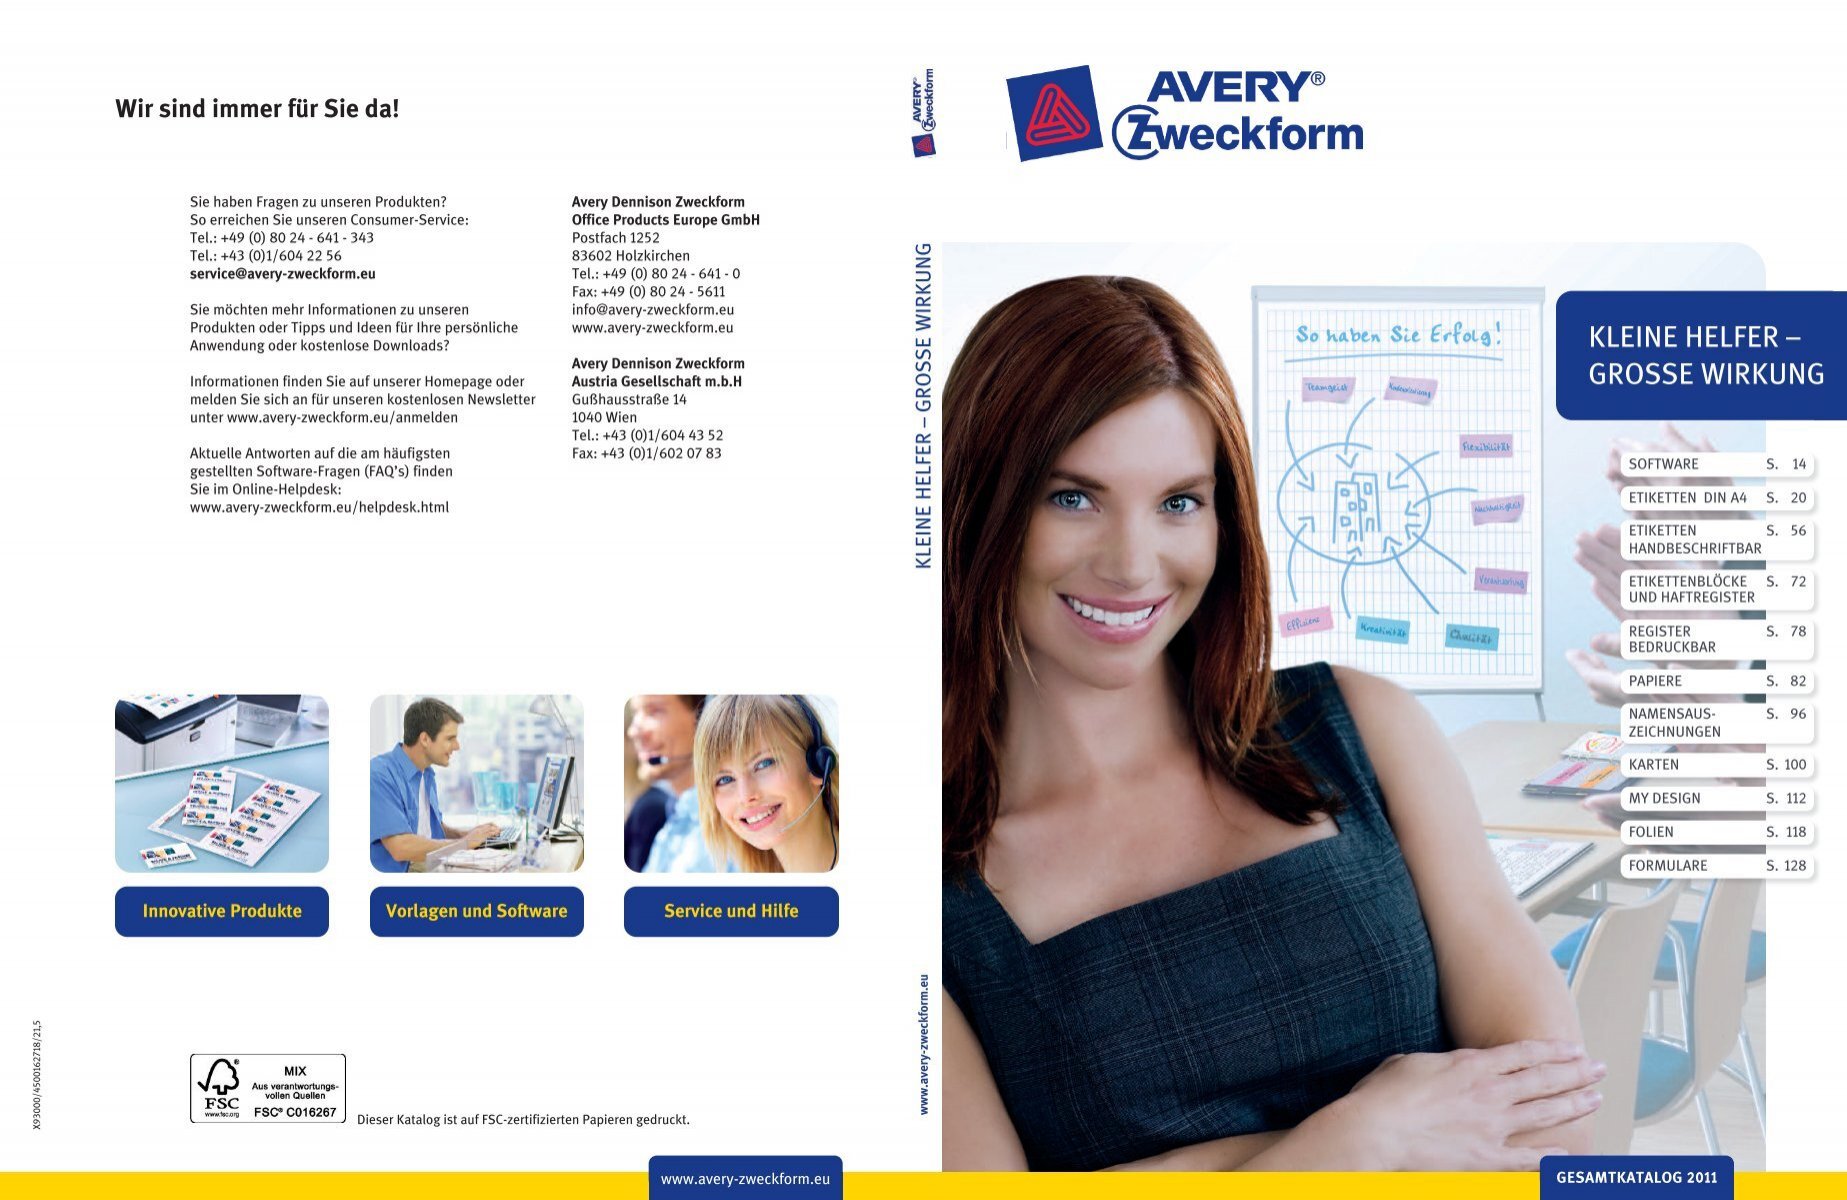 Avery Printable Magnetic Sheet